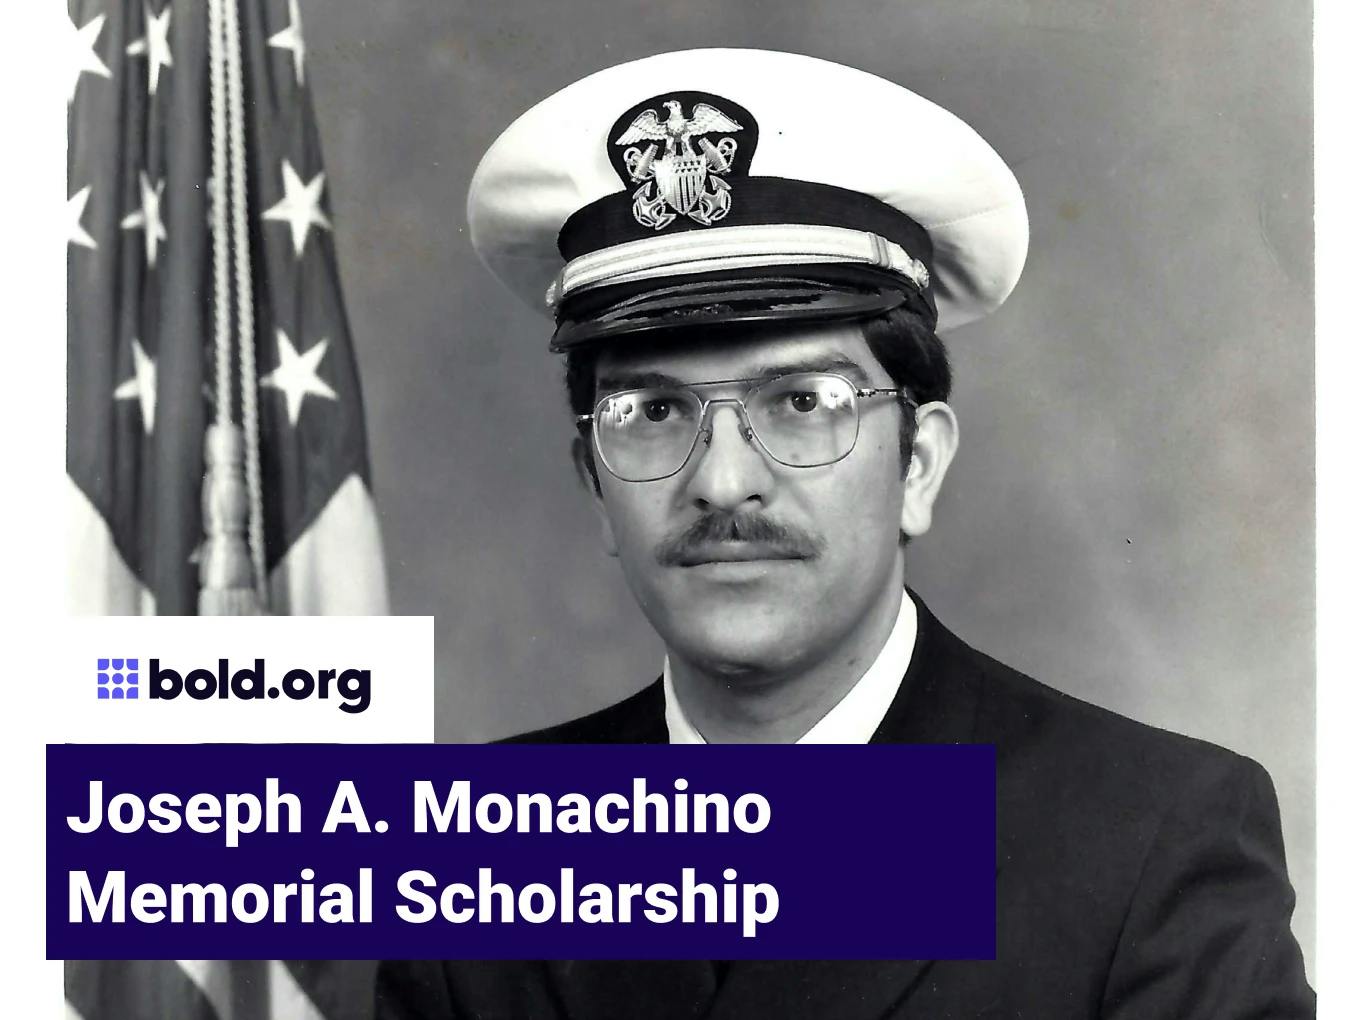 Joseph A. Monachino Memorial Scholarship